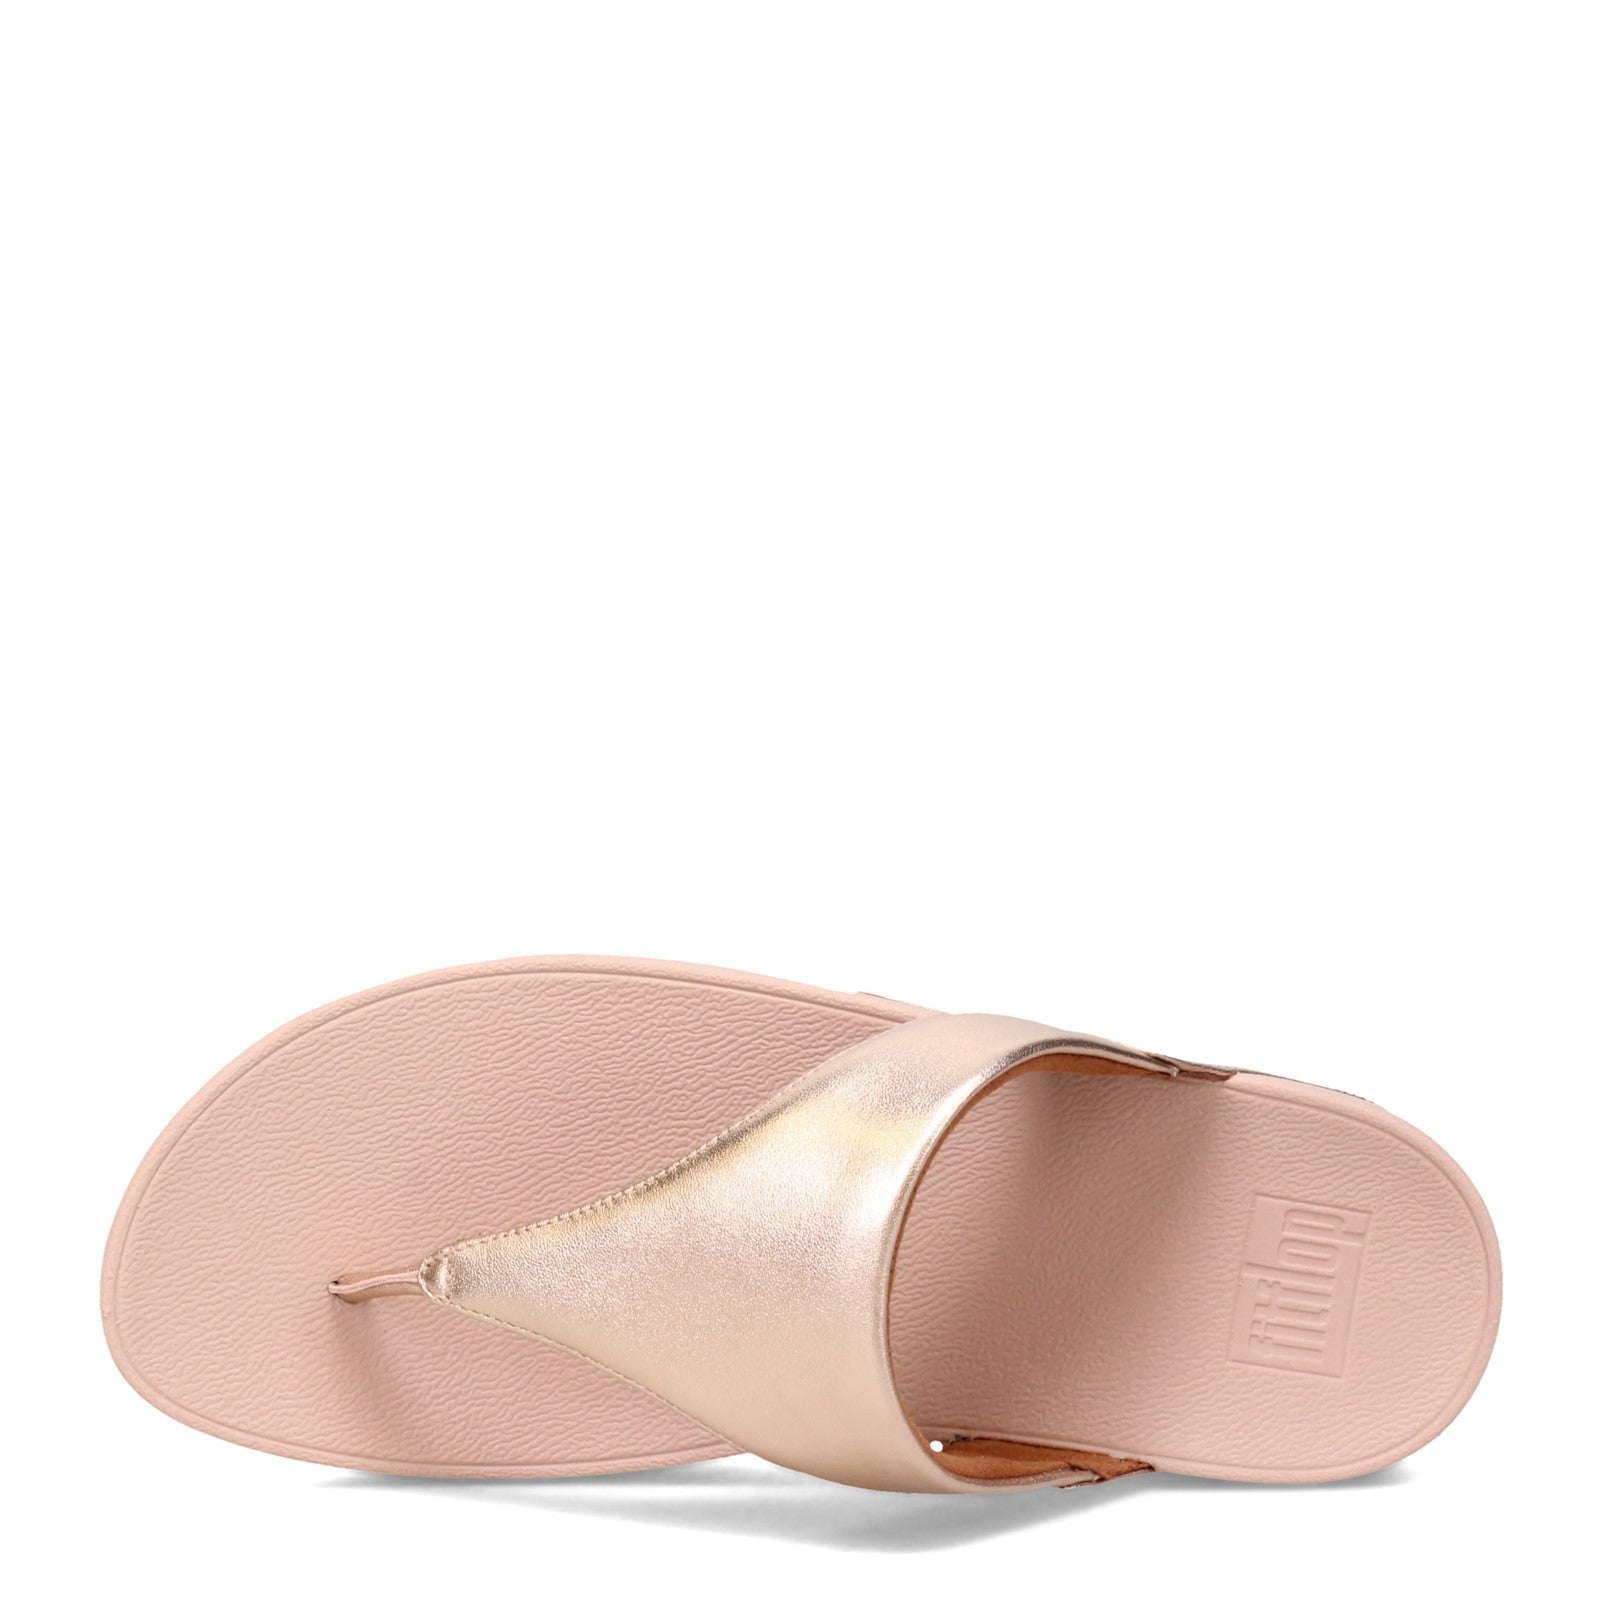 Fitflop Lulu Sandals slides flip flops Women's size 8 White Tan Rhinestone  shoe | Rhinestone shoes, Sandals, Shoes